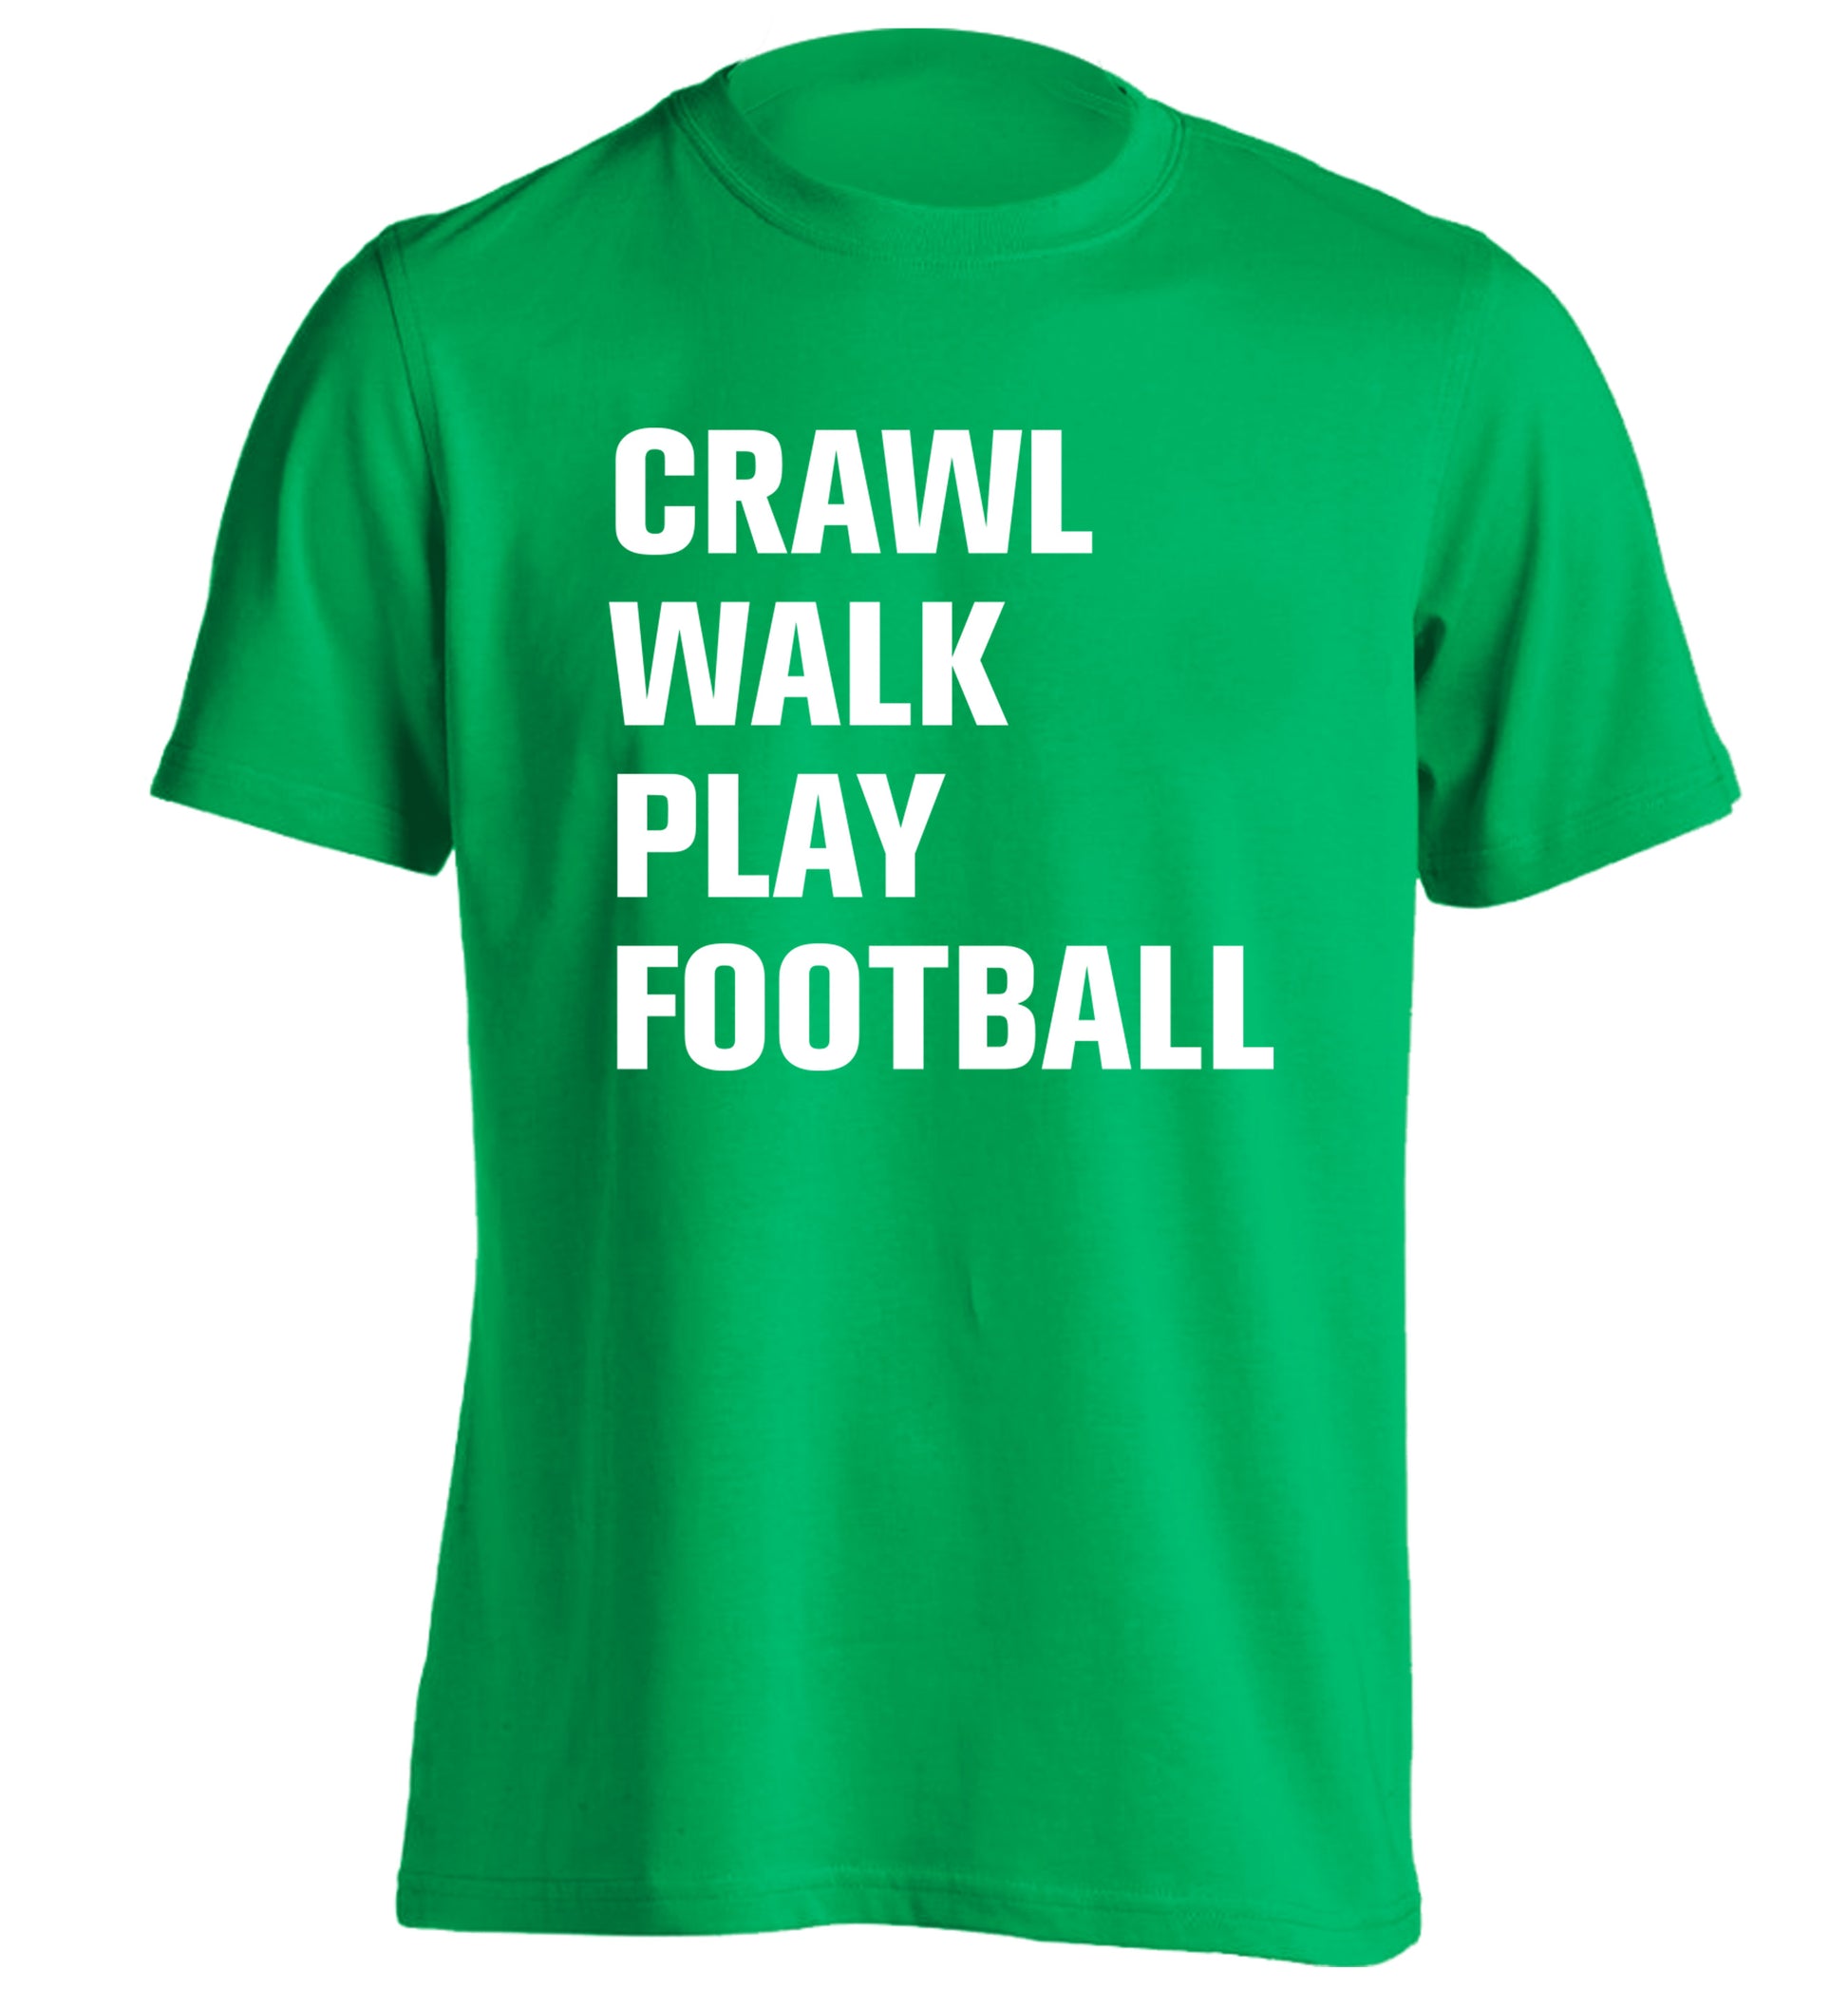 Crawl, walk, play football adults unisex green Tshirt 2XL